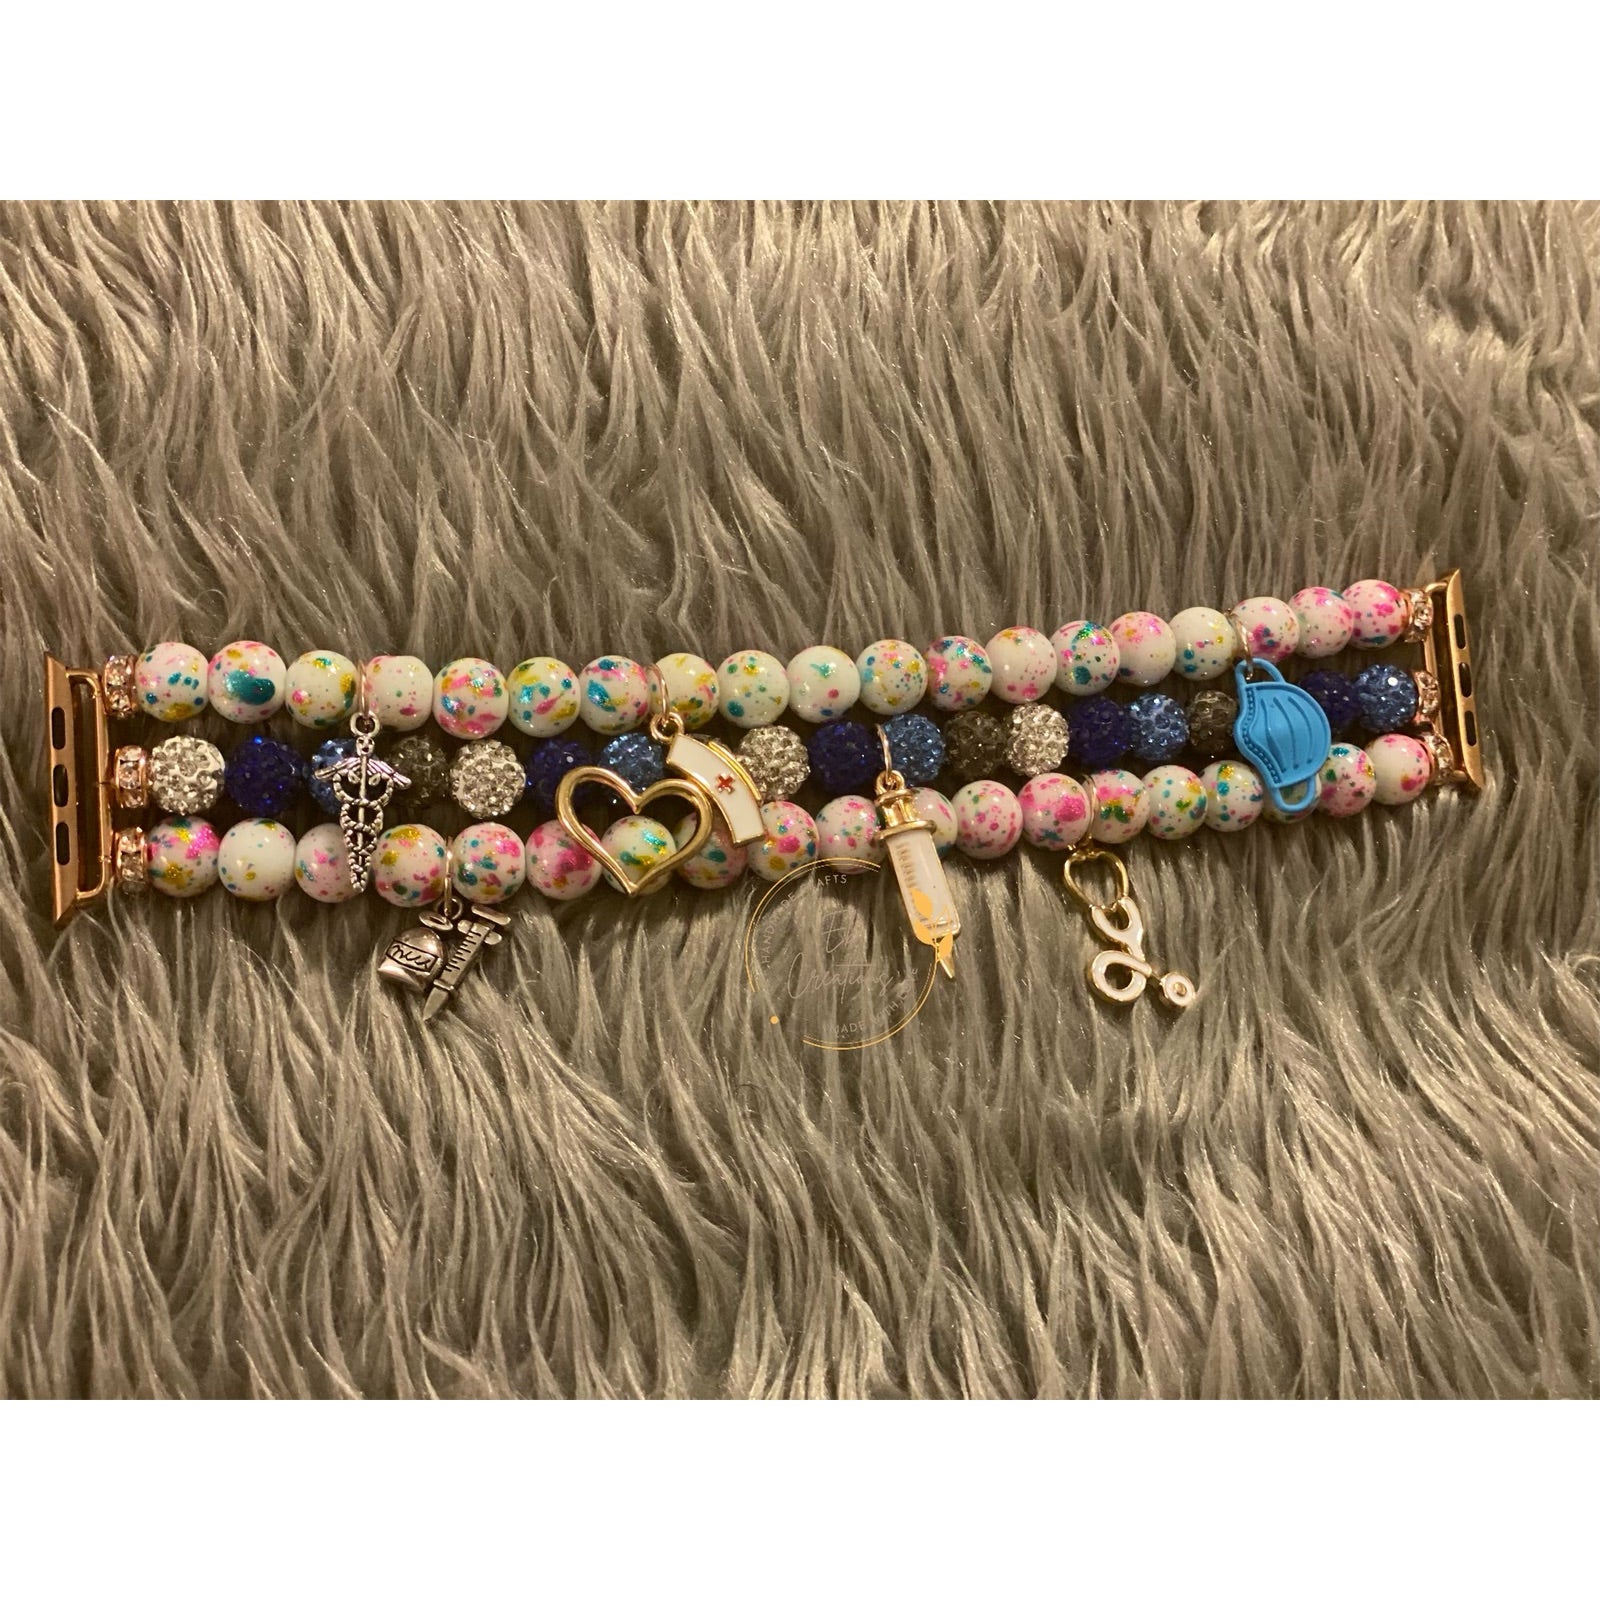 Wrapables Friendship Beaded Enamel Charm Bracelet, Pink Bow Kitty Crystal  Beads - Walmart.com